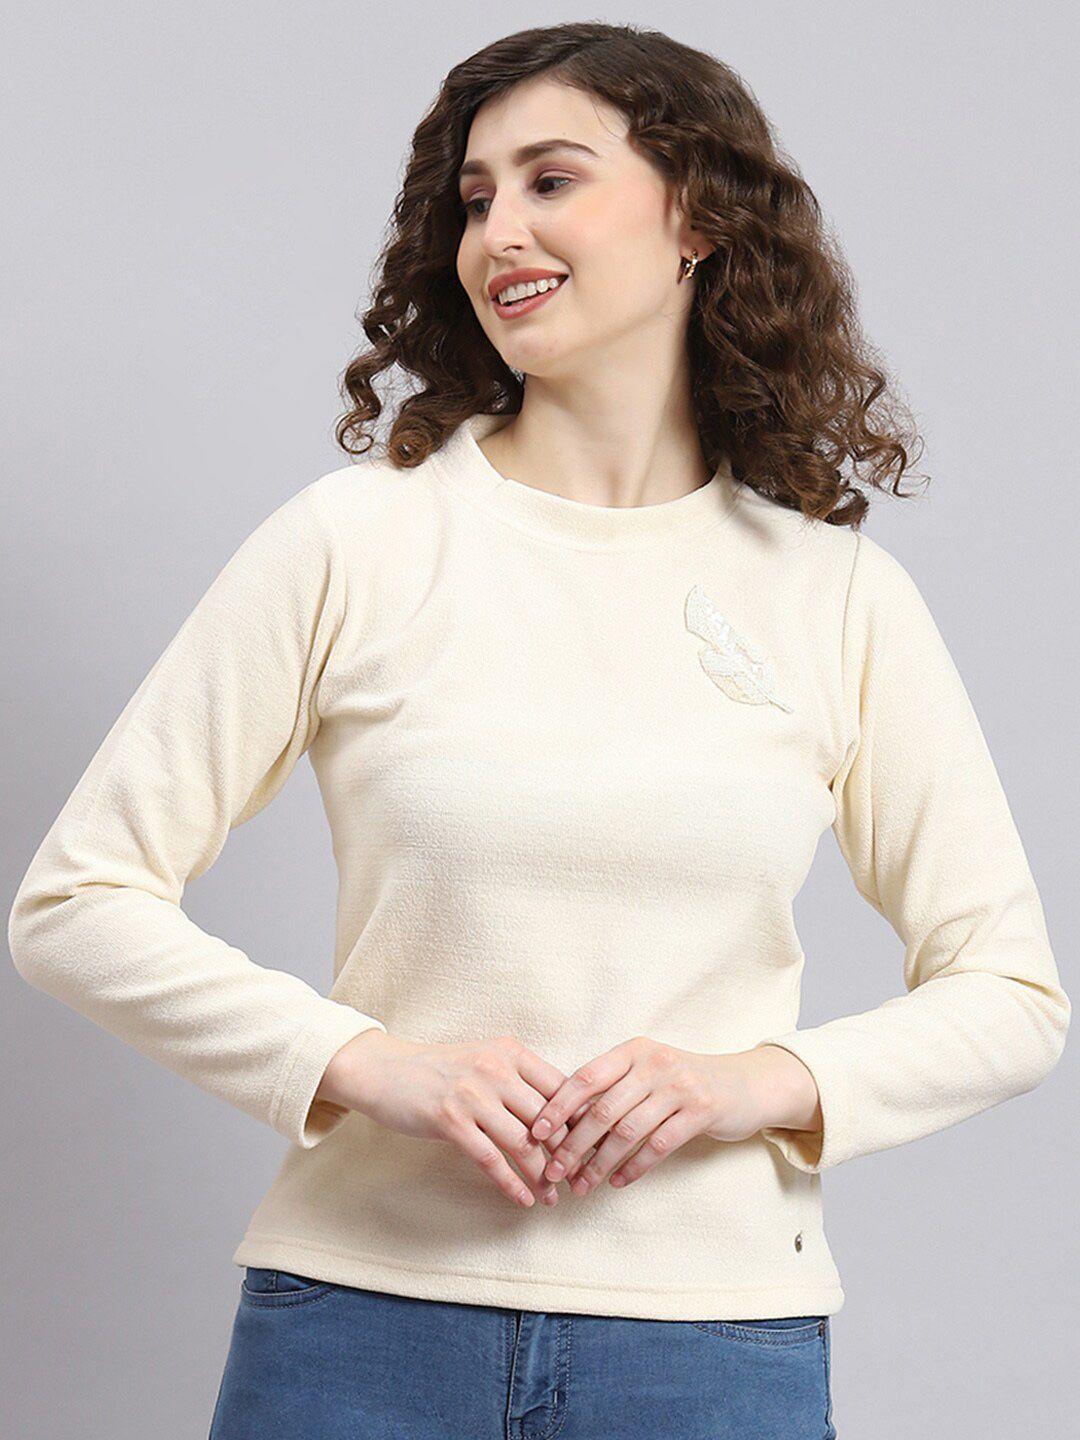 monte-carlo-embroidered-pullover-sweater